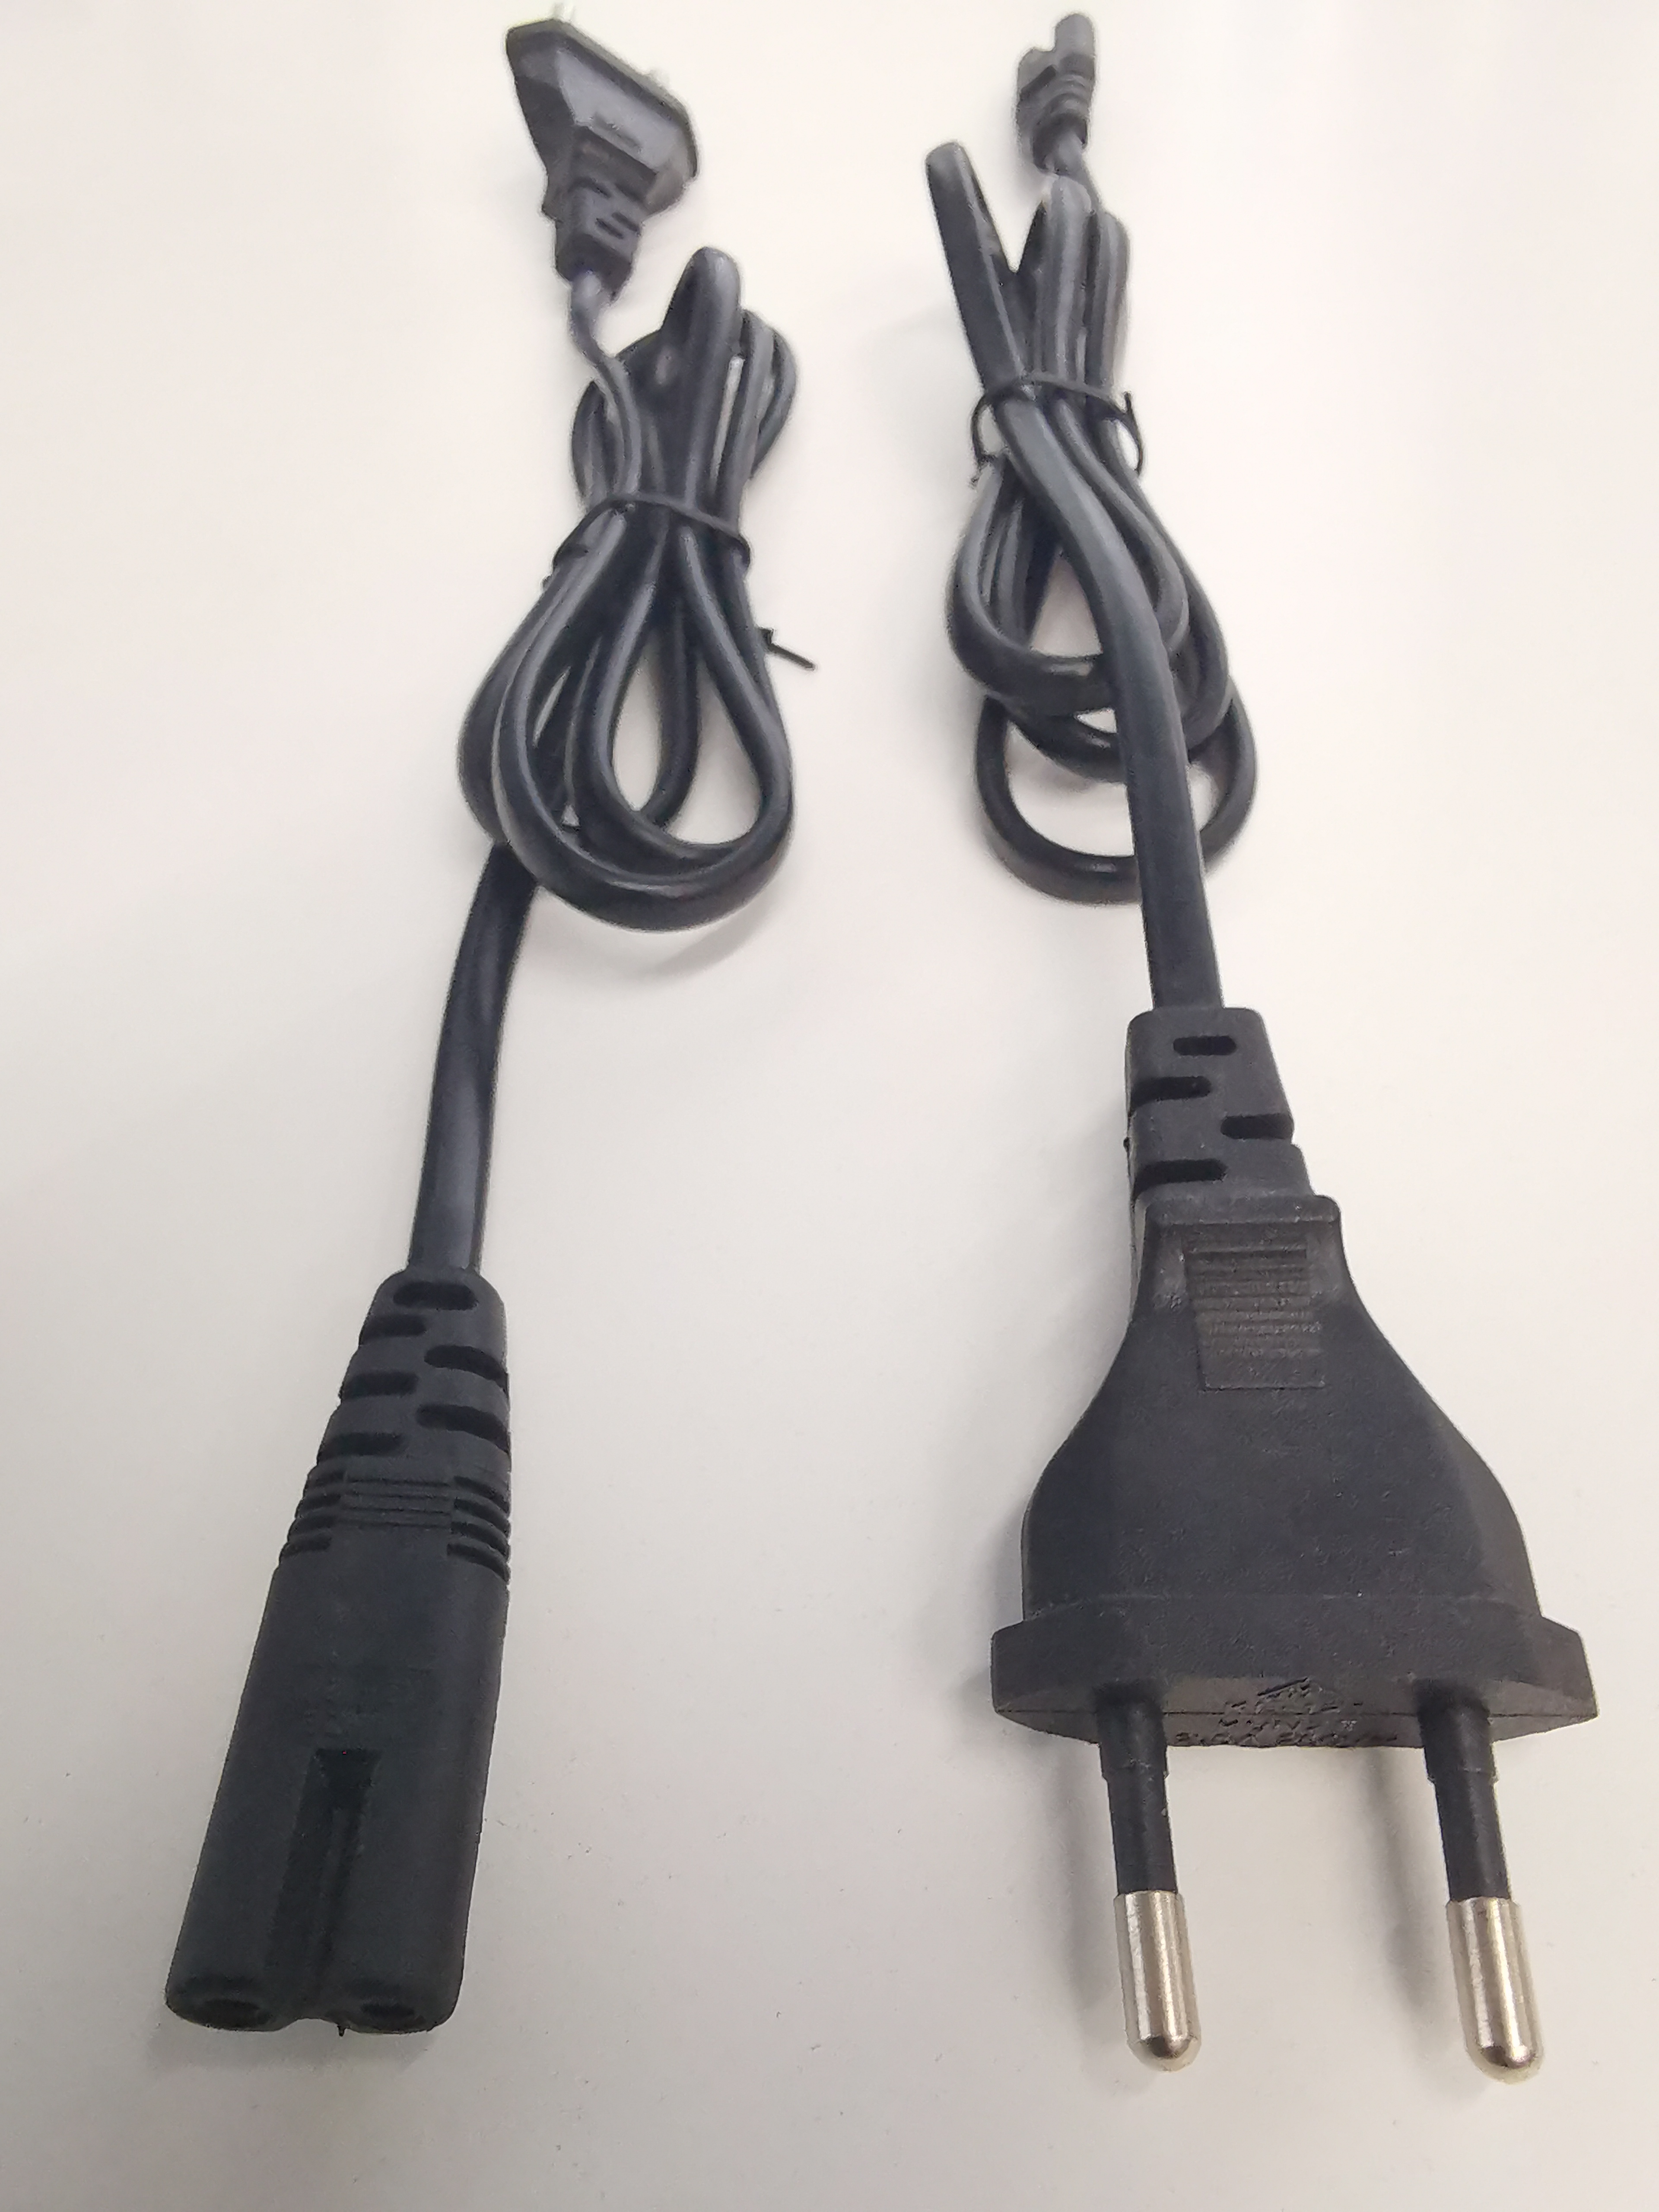 2 Pin European Plug (Type C) to C7 Cable 1m